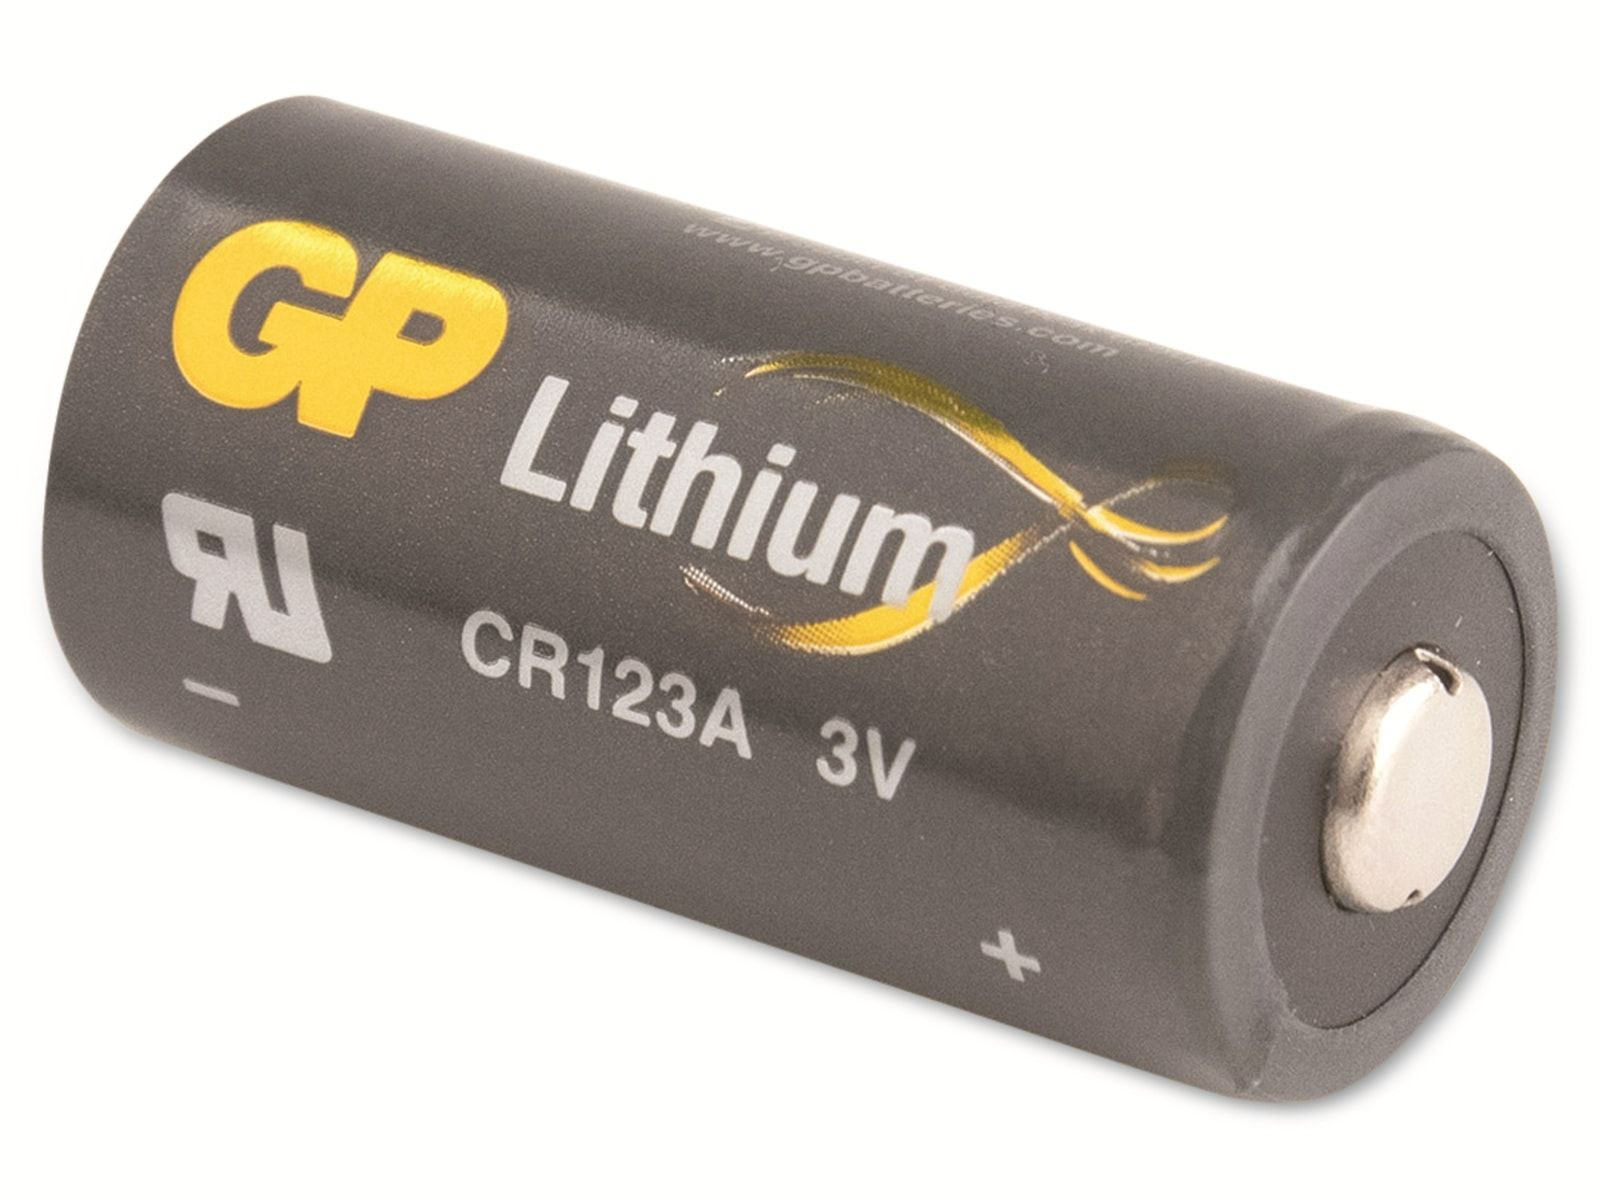 GP GP Lithium-Batterie CR123A, 3V, Stück Batterie Lithium 10